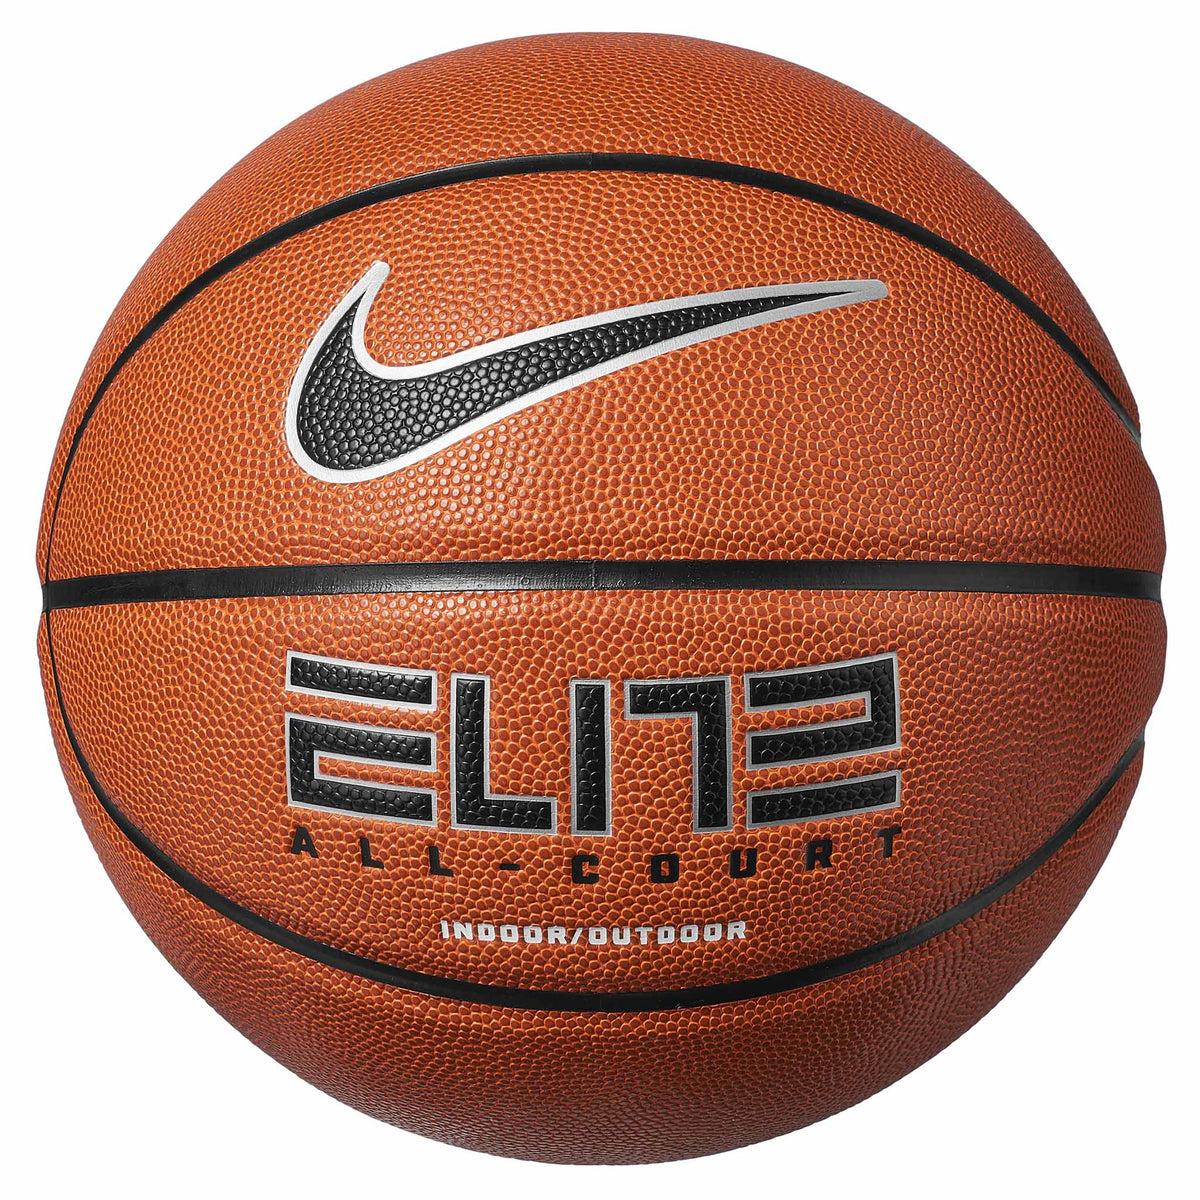 Nike Elite All-Court 8P 2.0 ballon de basketball - Amber / Black